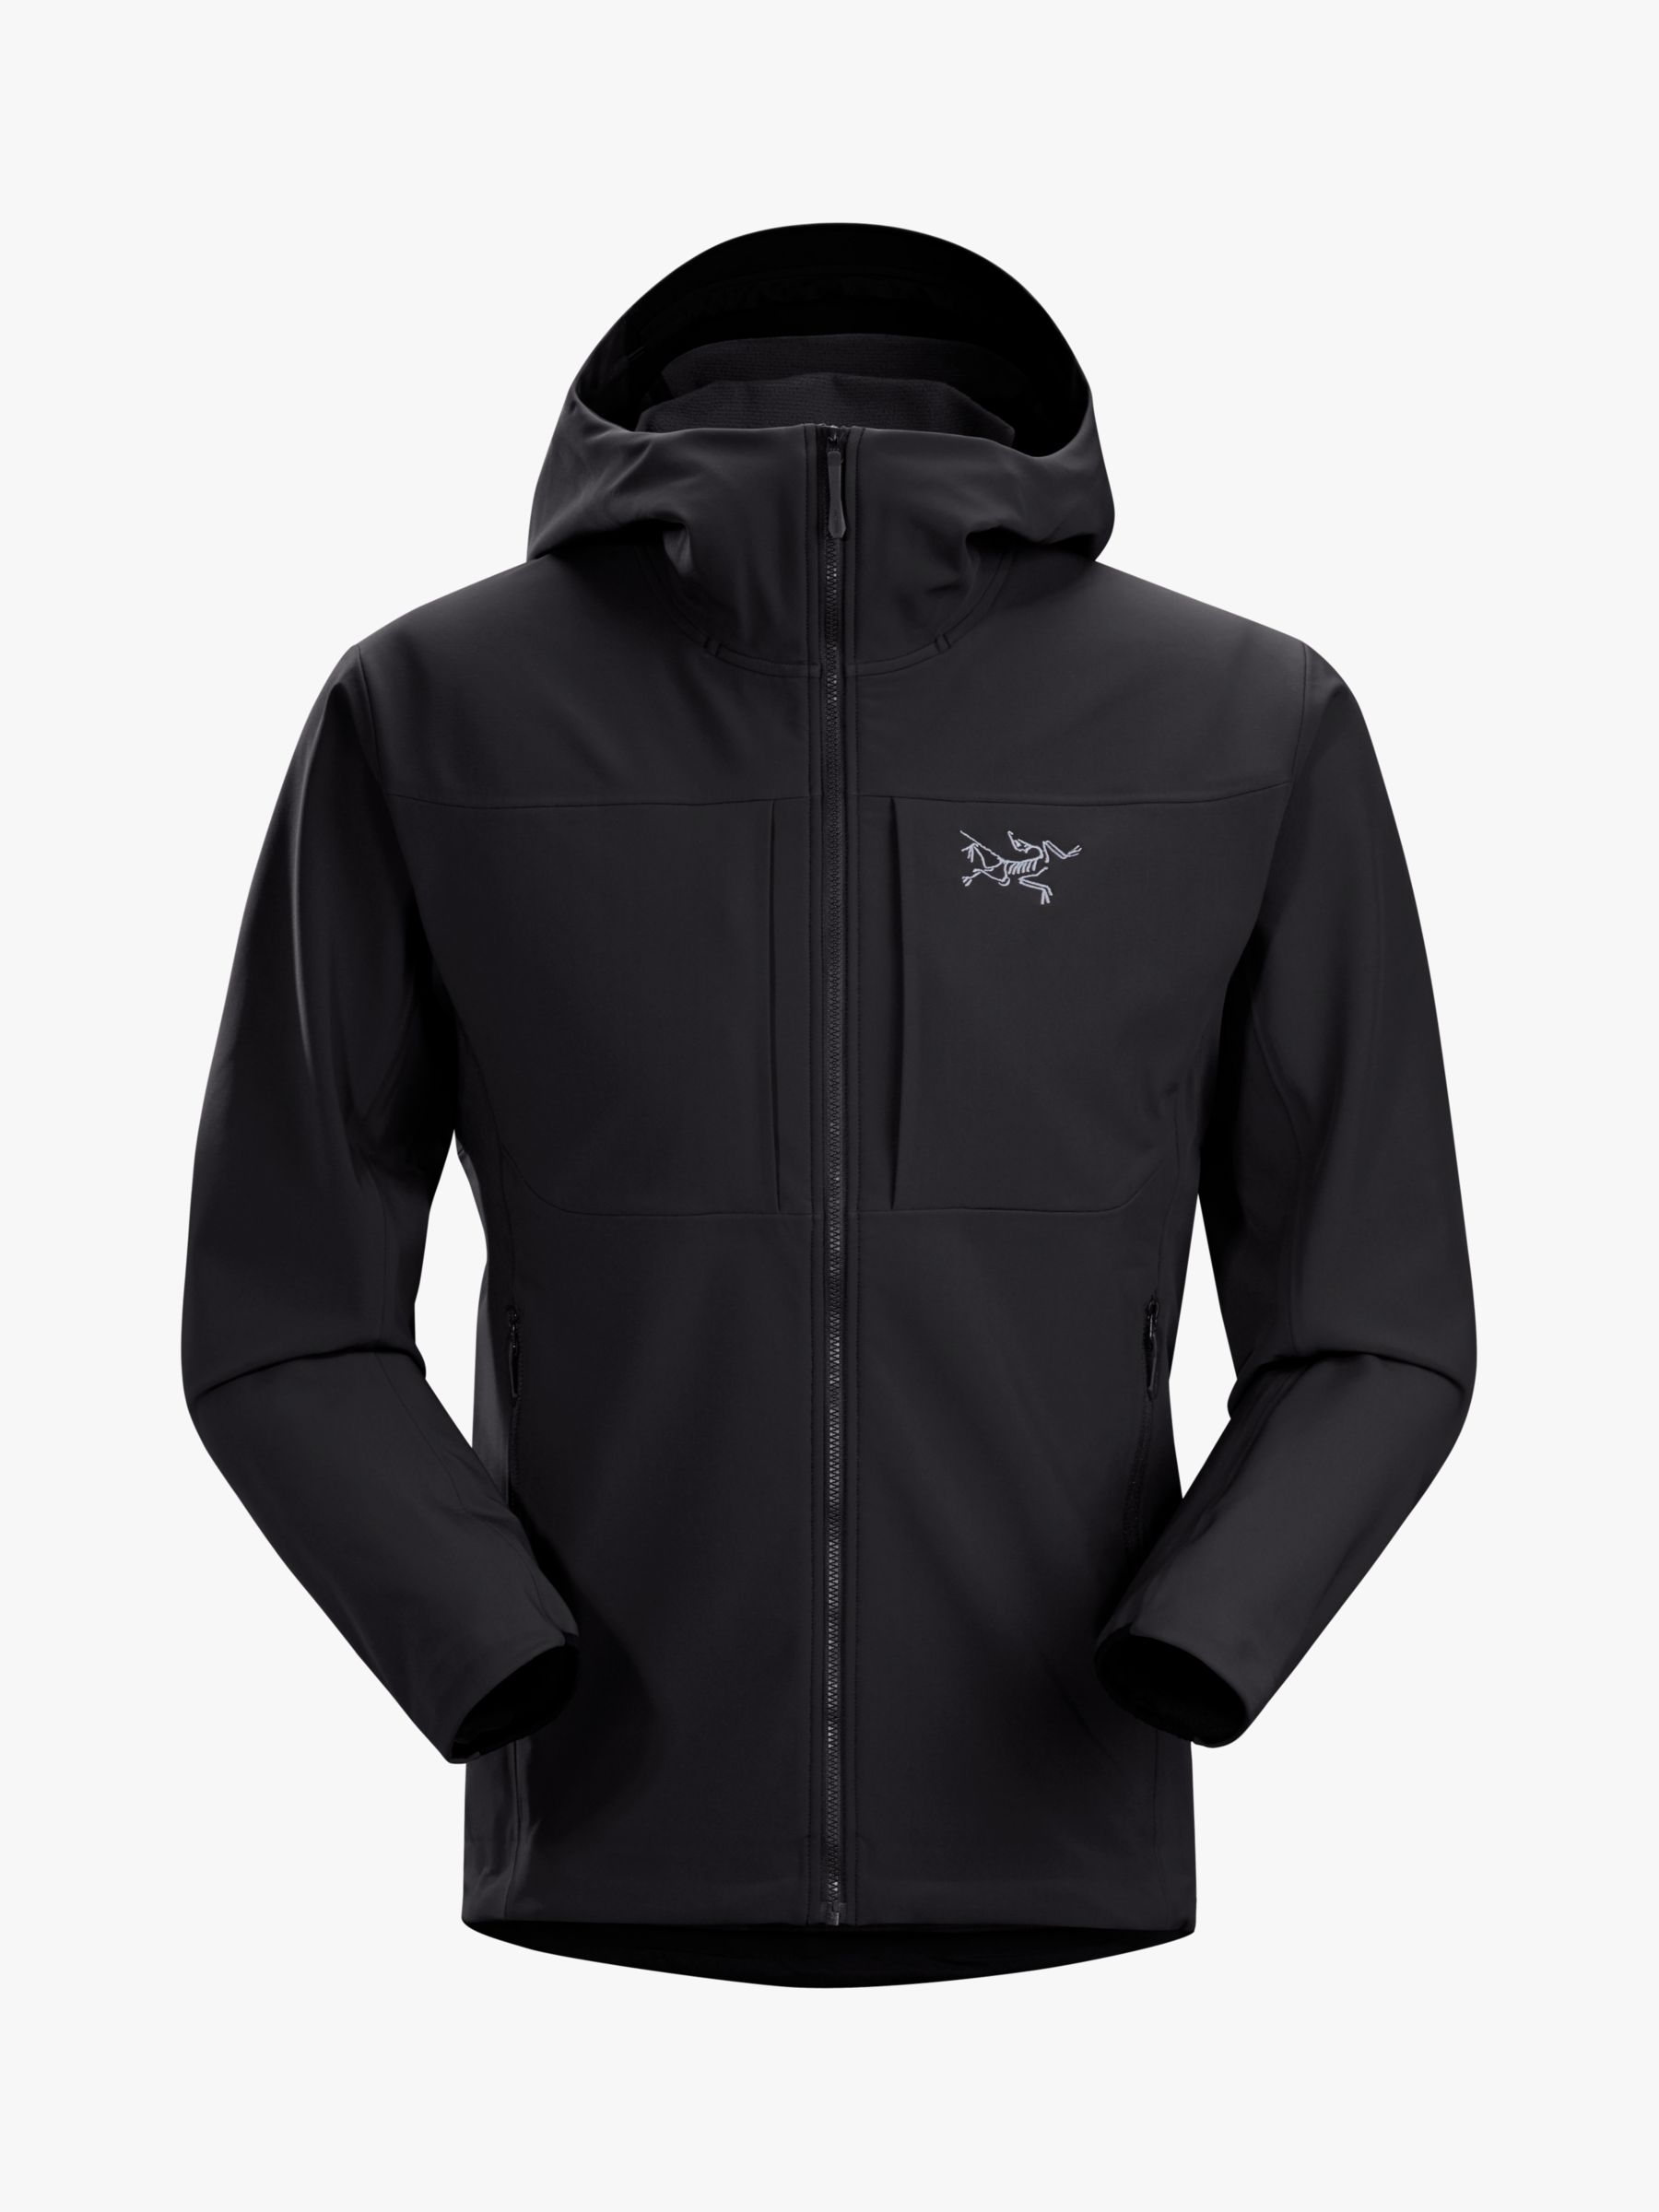 Arc'teryx Gamma MX Men's Water Resistant Jacket, Black, S